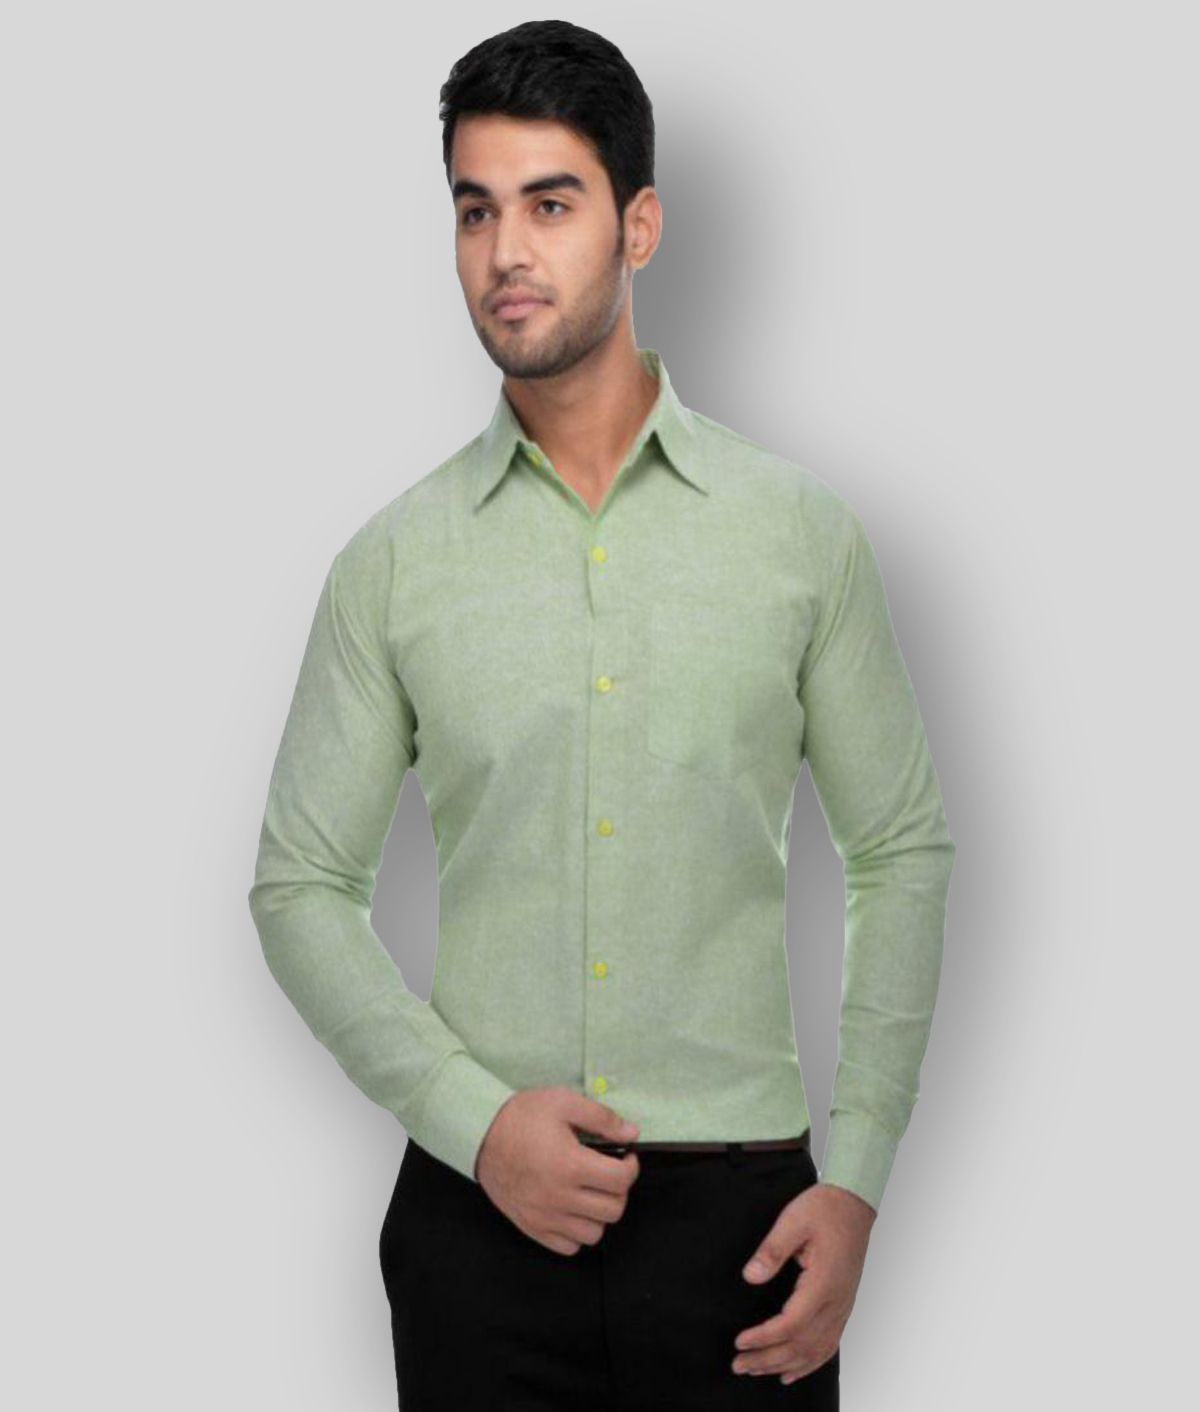     			DESHBANDHU DBK - Green Cotton Regular Fit Men's Formal Shirt (Pack of 1)